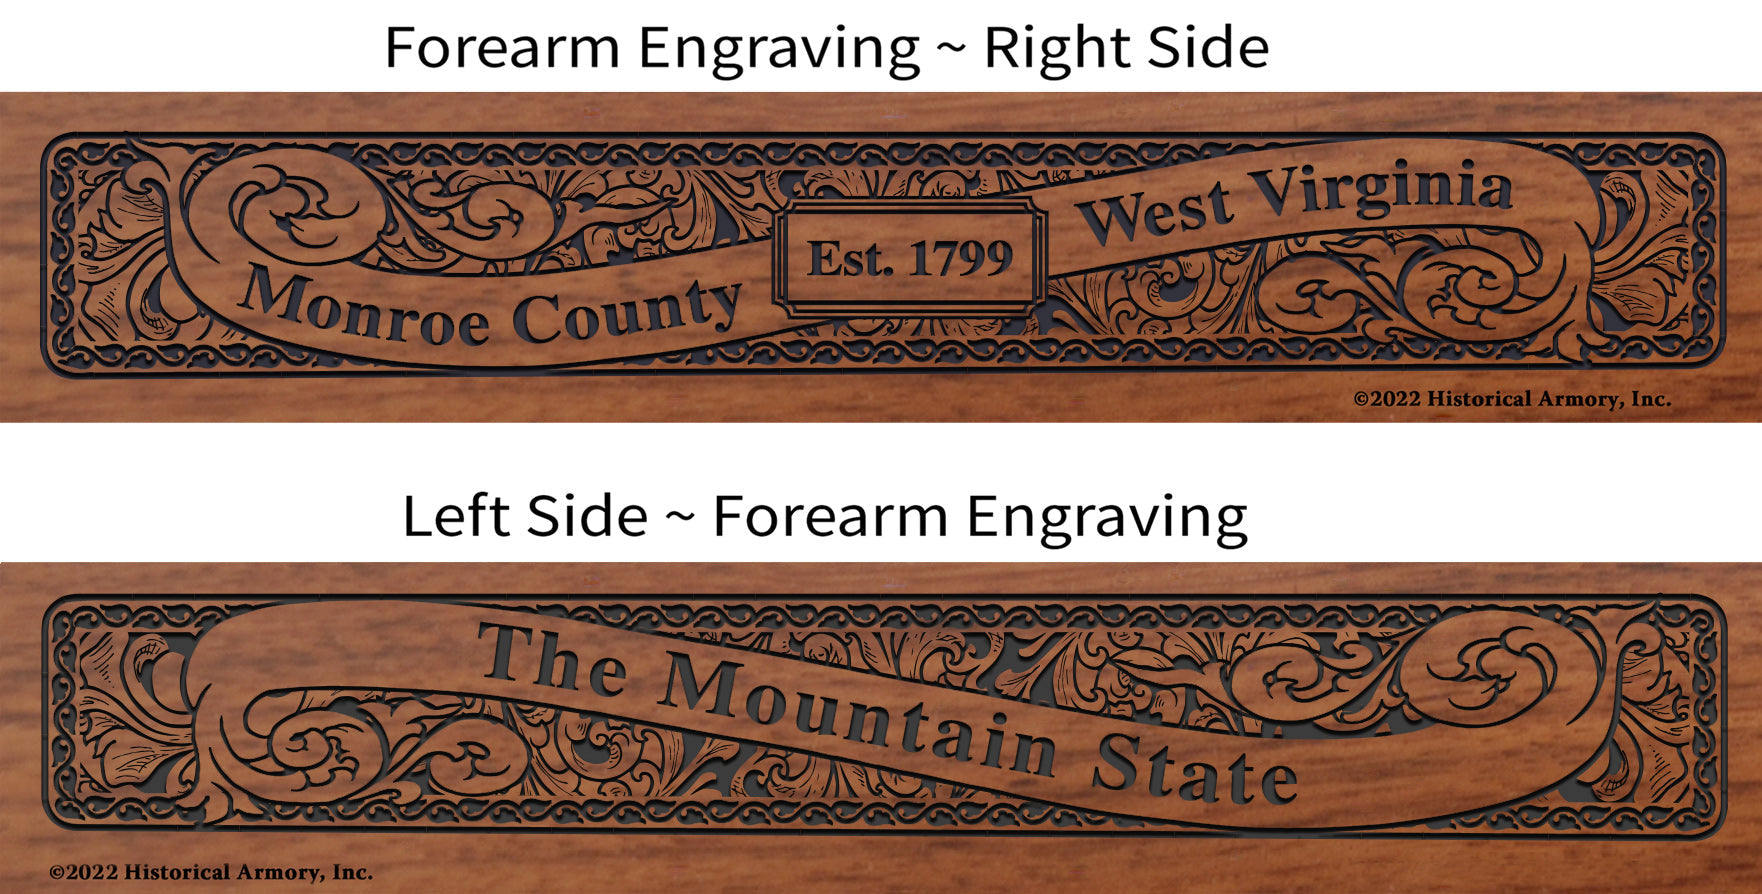 Monroe County West Virginia Engraved Rifle Forearm